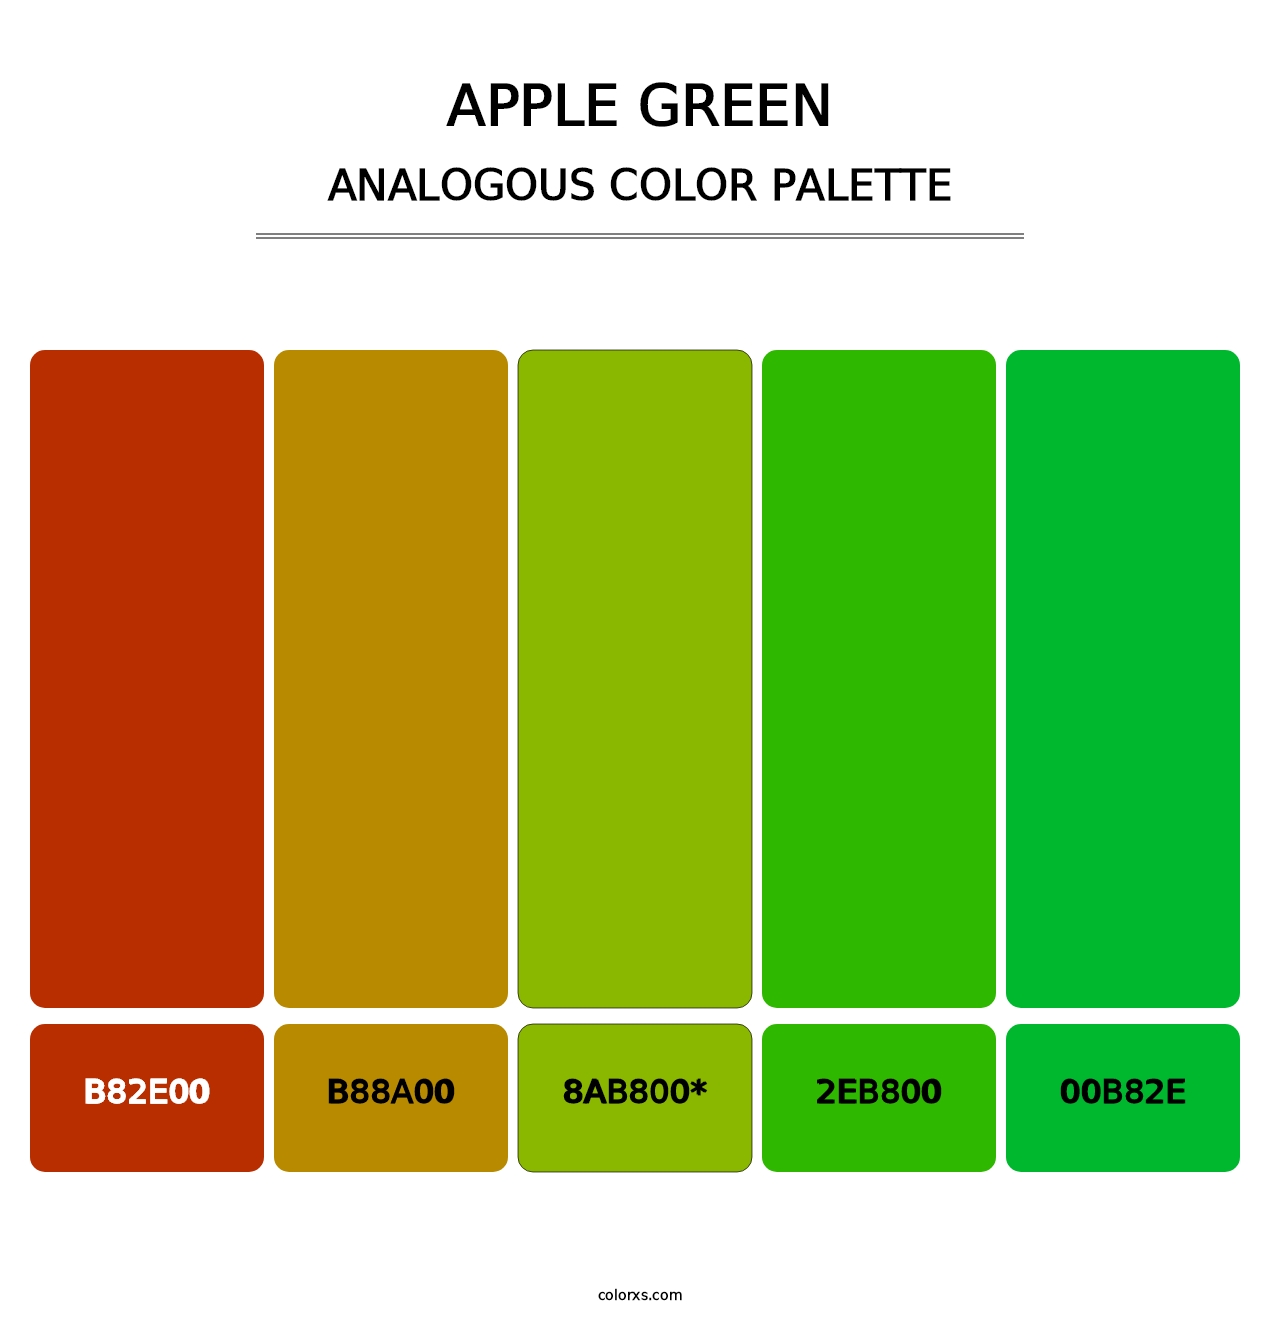 Apple Green - Analogous Color Palette